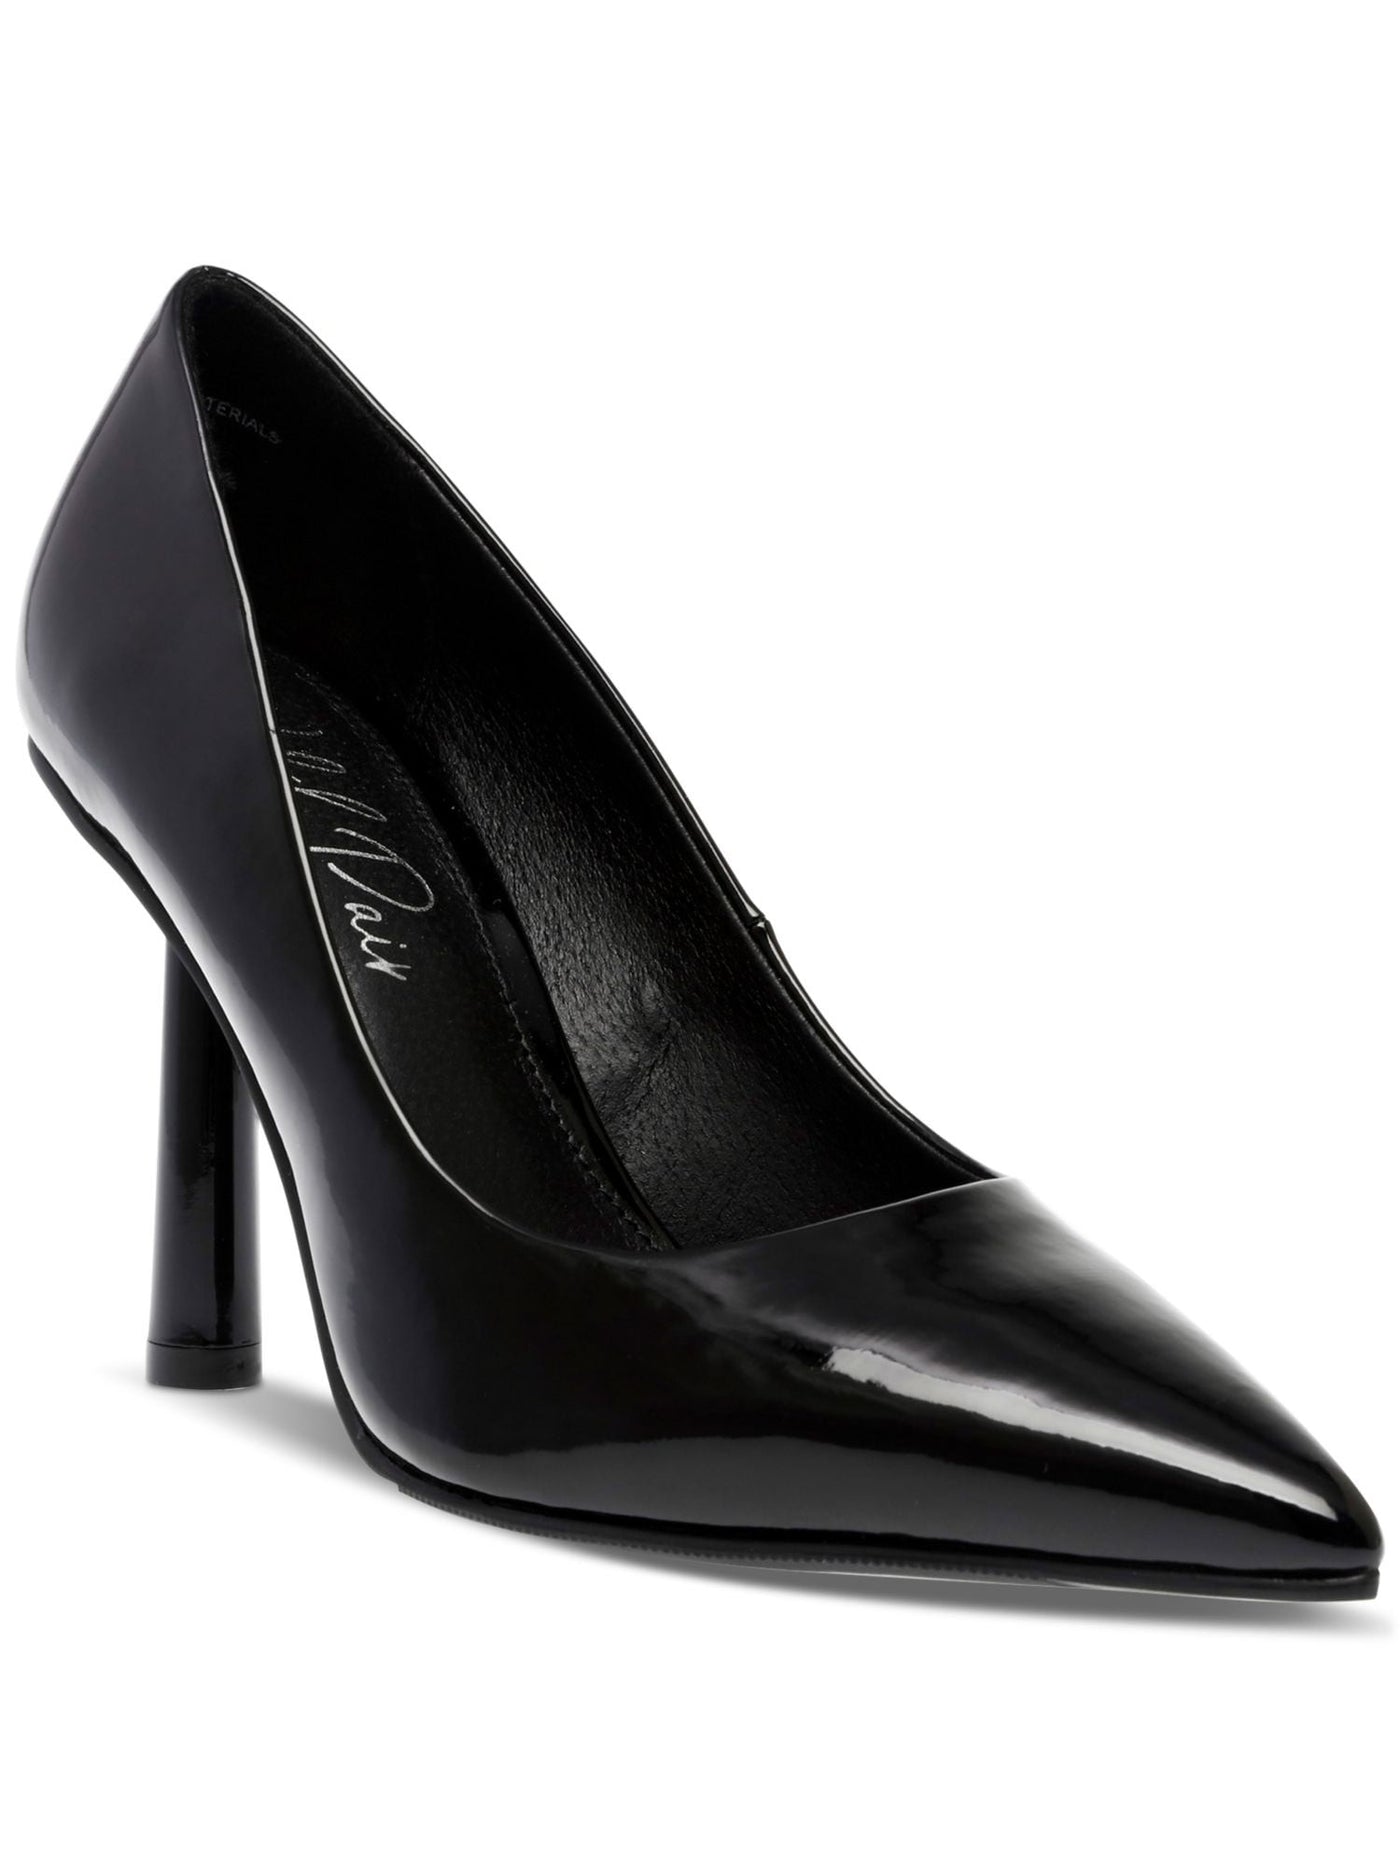 WILD PAIR Womens Black Slip Resistant Comfort Taraa Pointed Toe Stiletto Slip On Pumps Shoes 10 M